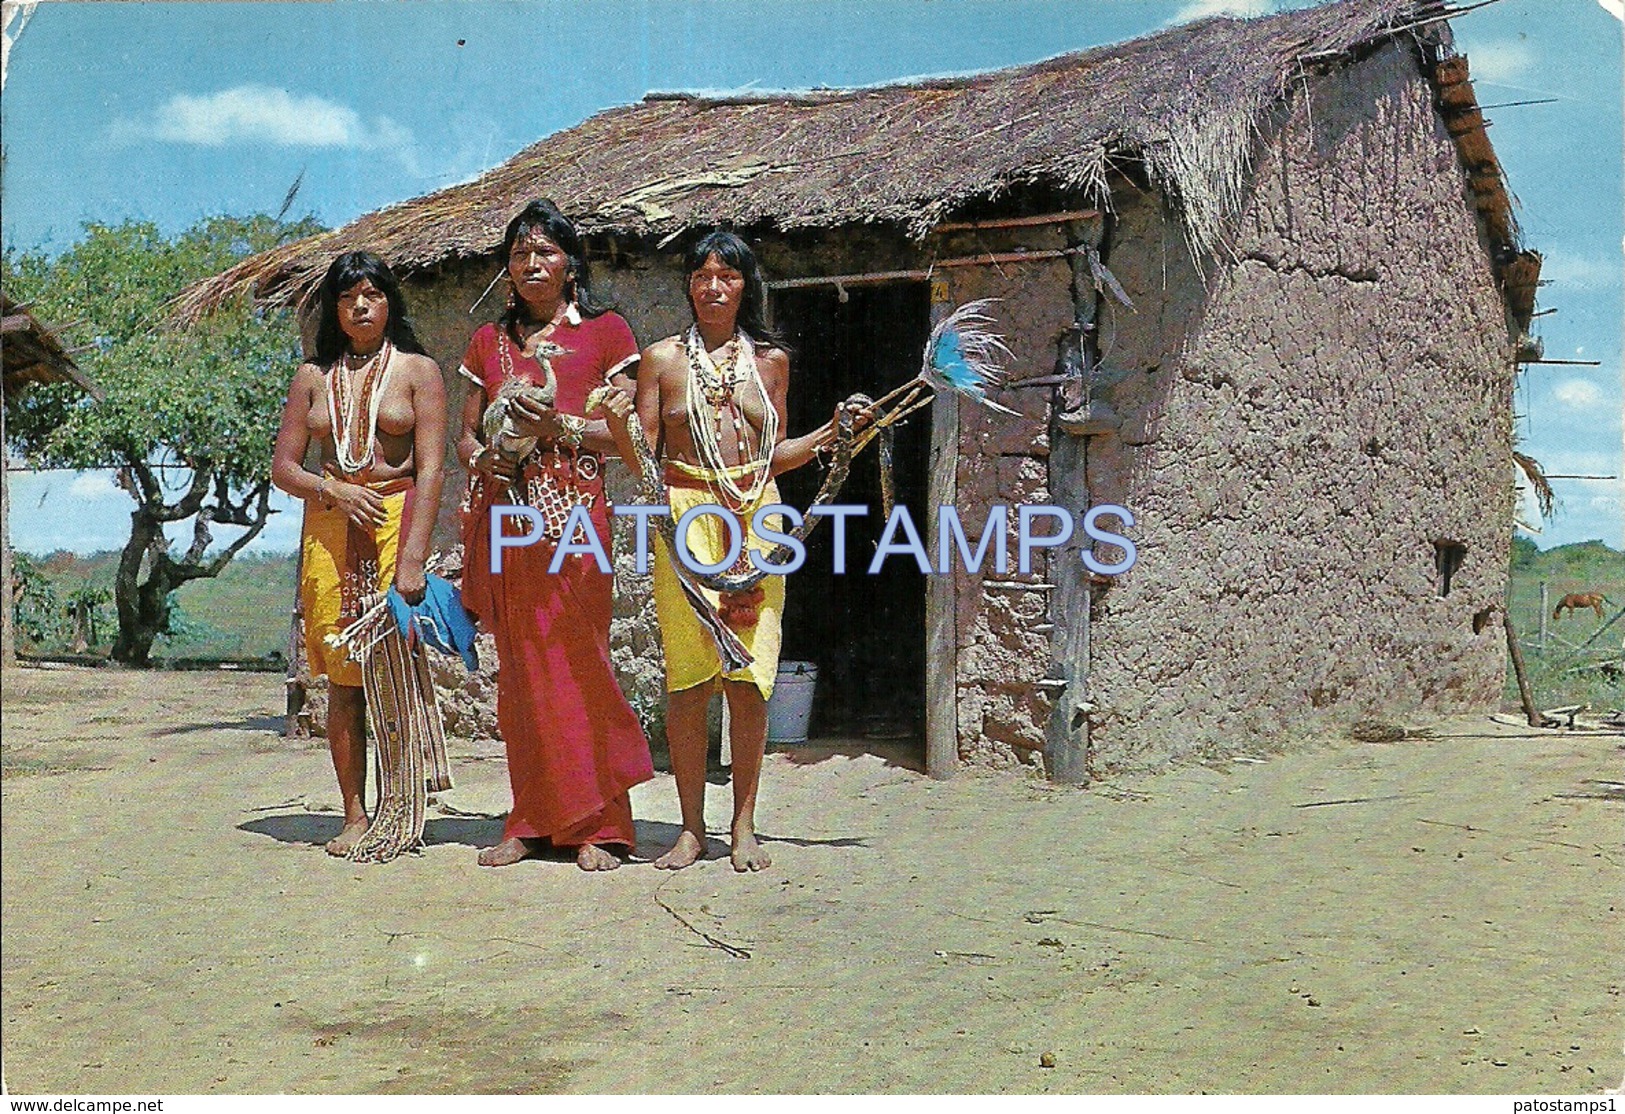 62247 PARAGUAY COSTUMES NATIVE WOMAN SEMI NUDE YEAR 1971 POSTAL POSTCARD - Paraguay